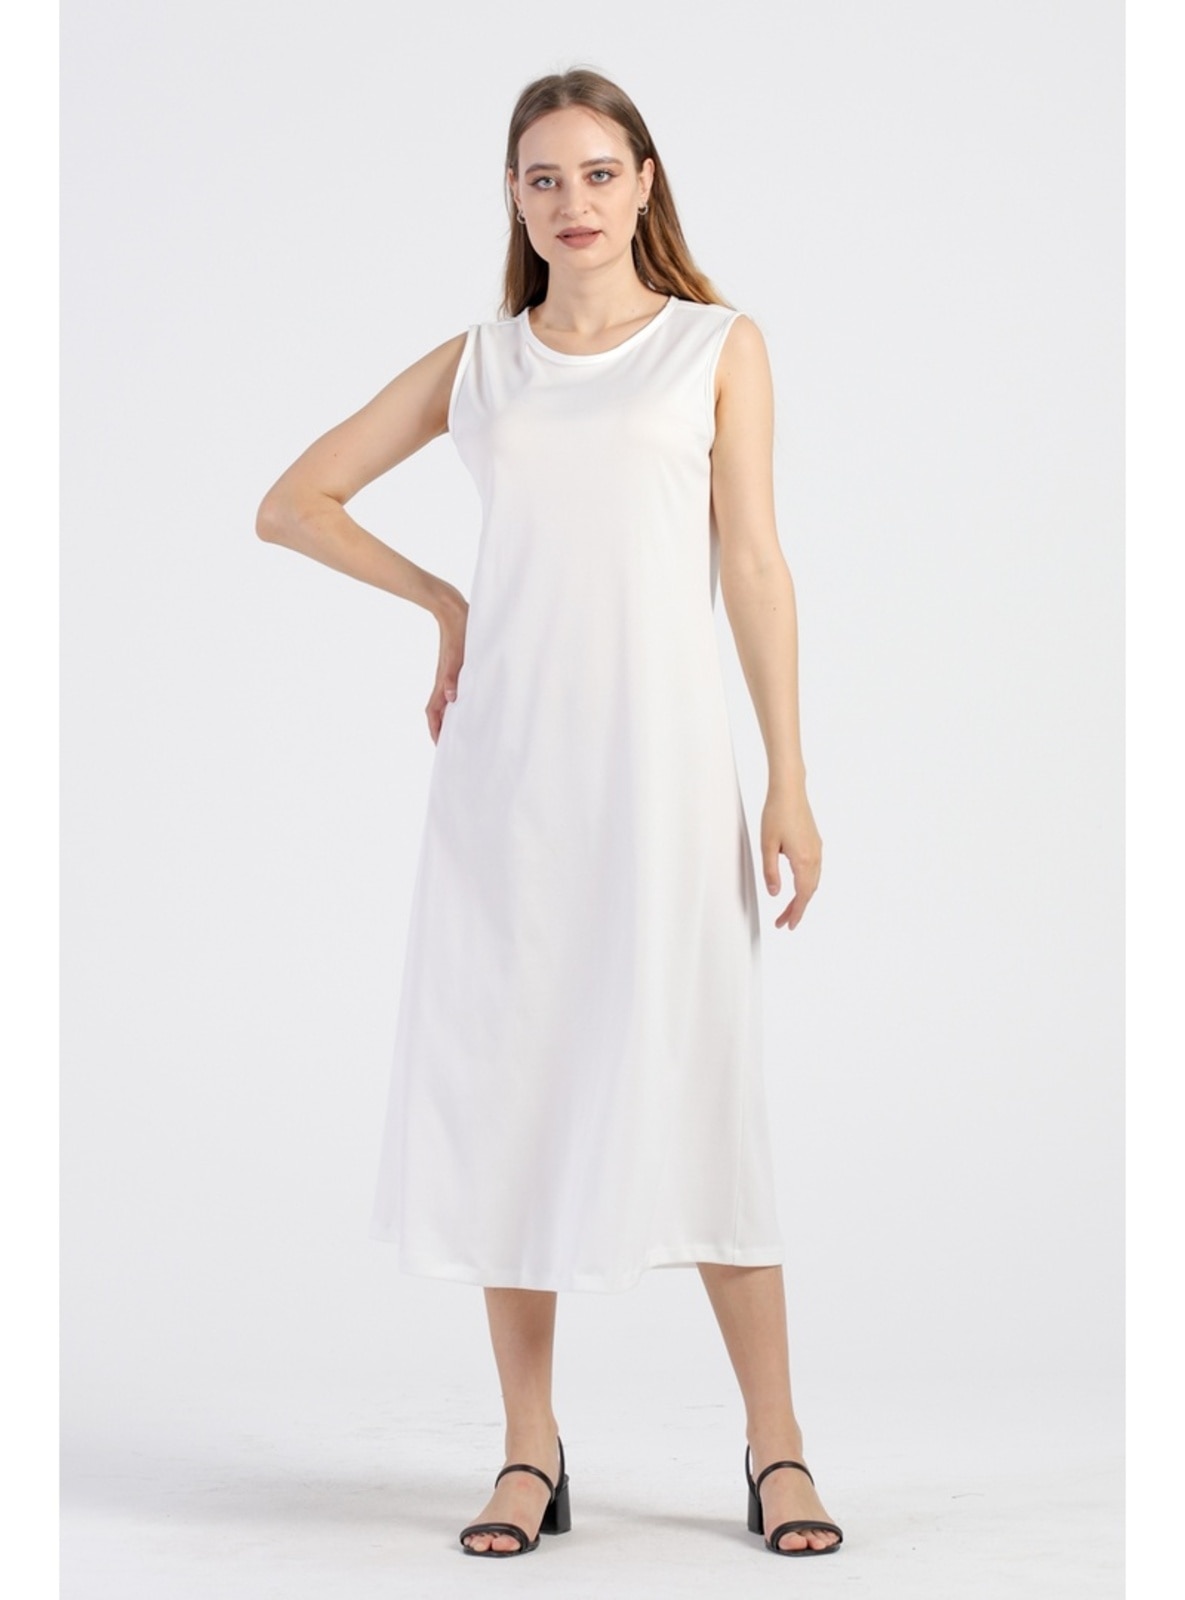 Petticoat Lining Dress White